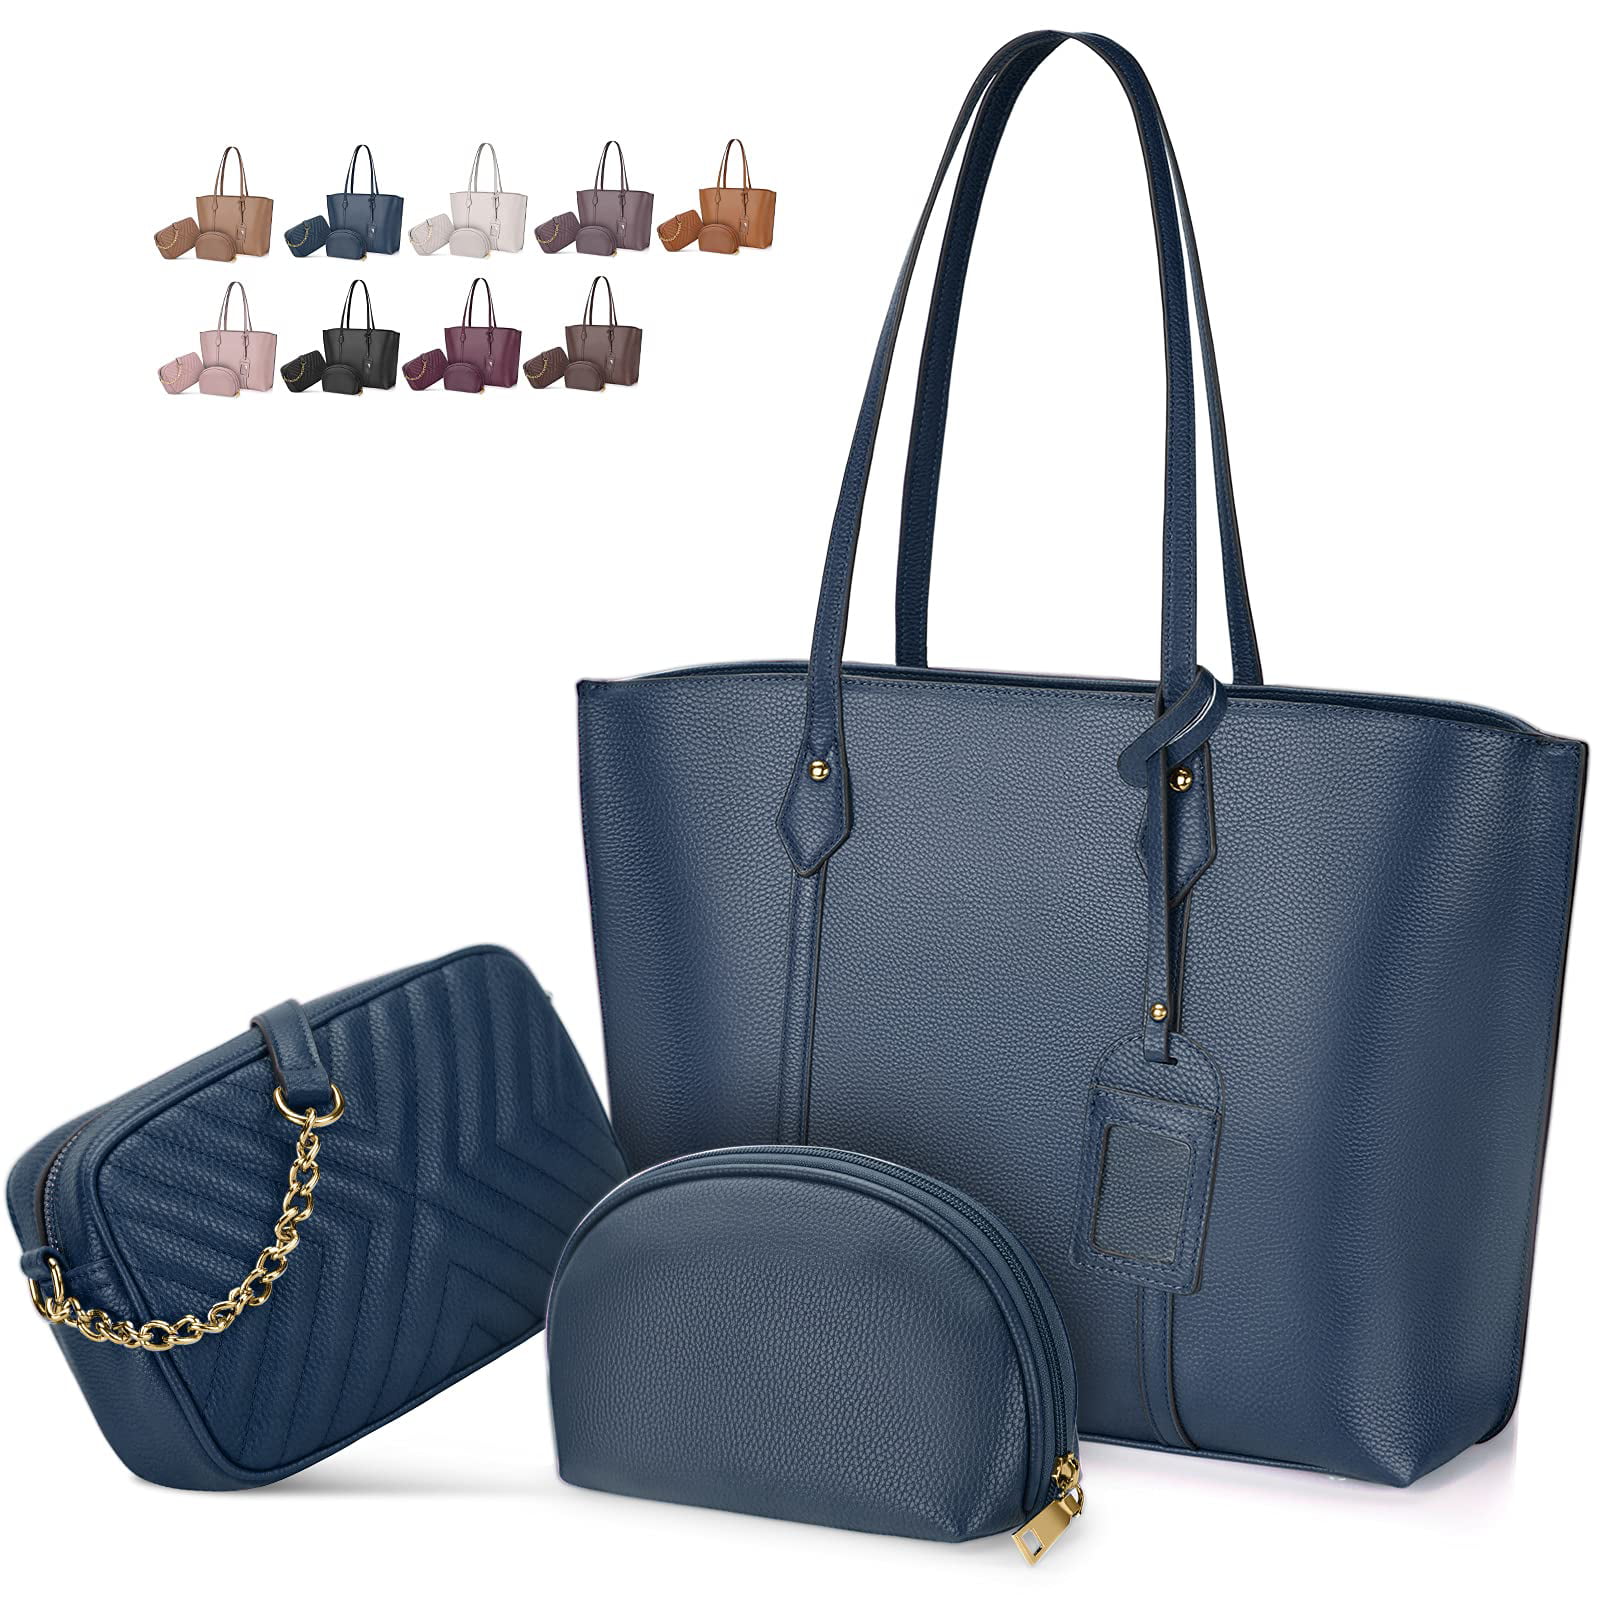 Geometry Leather Top Handle Satchel Girl Handbag Shoulder Tote Bag for Girls Women